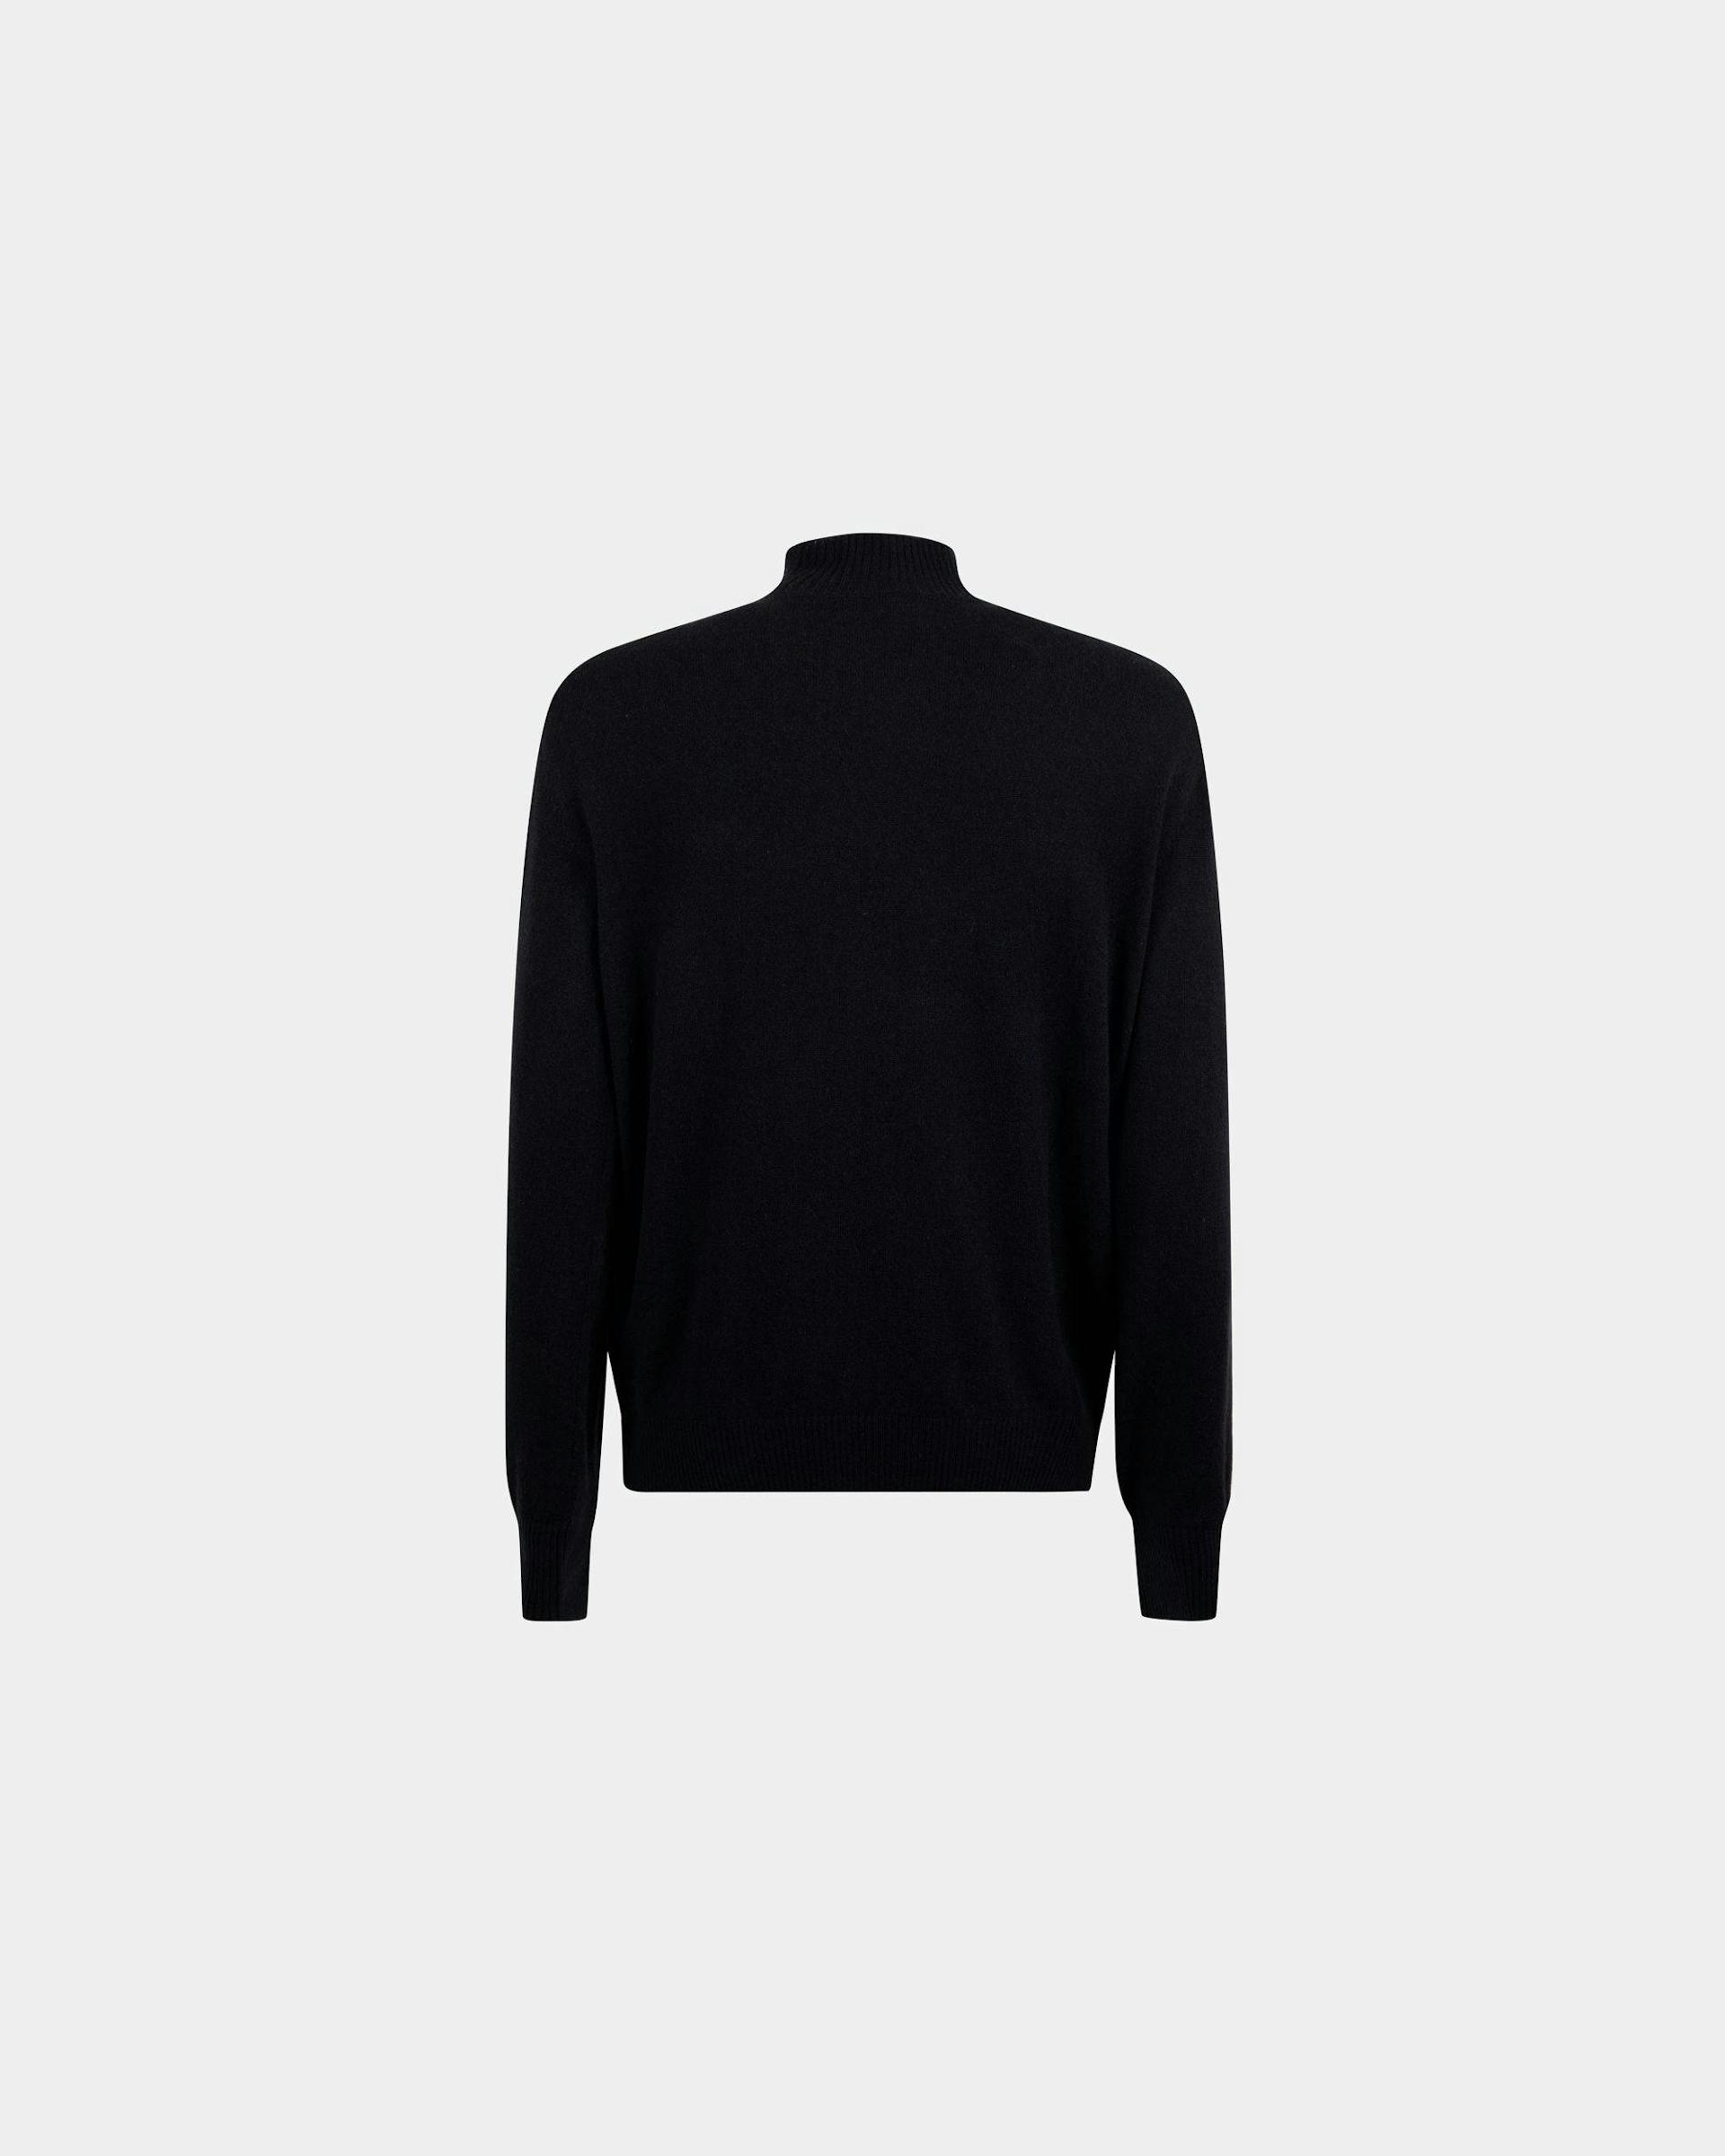 Men's Turtleneck Sweater In Dark Blue Cashmere | Bally | Still Life Back